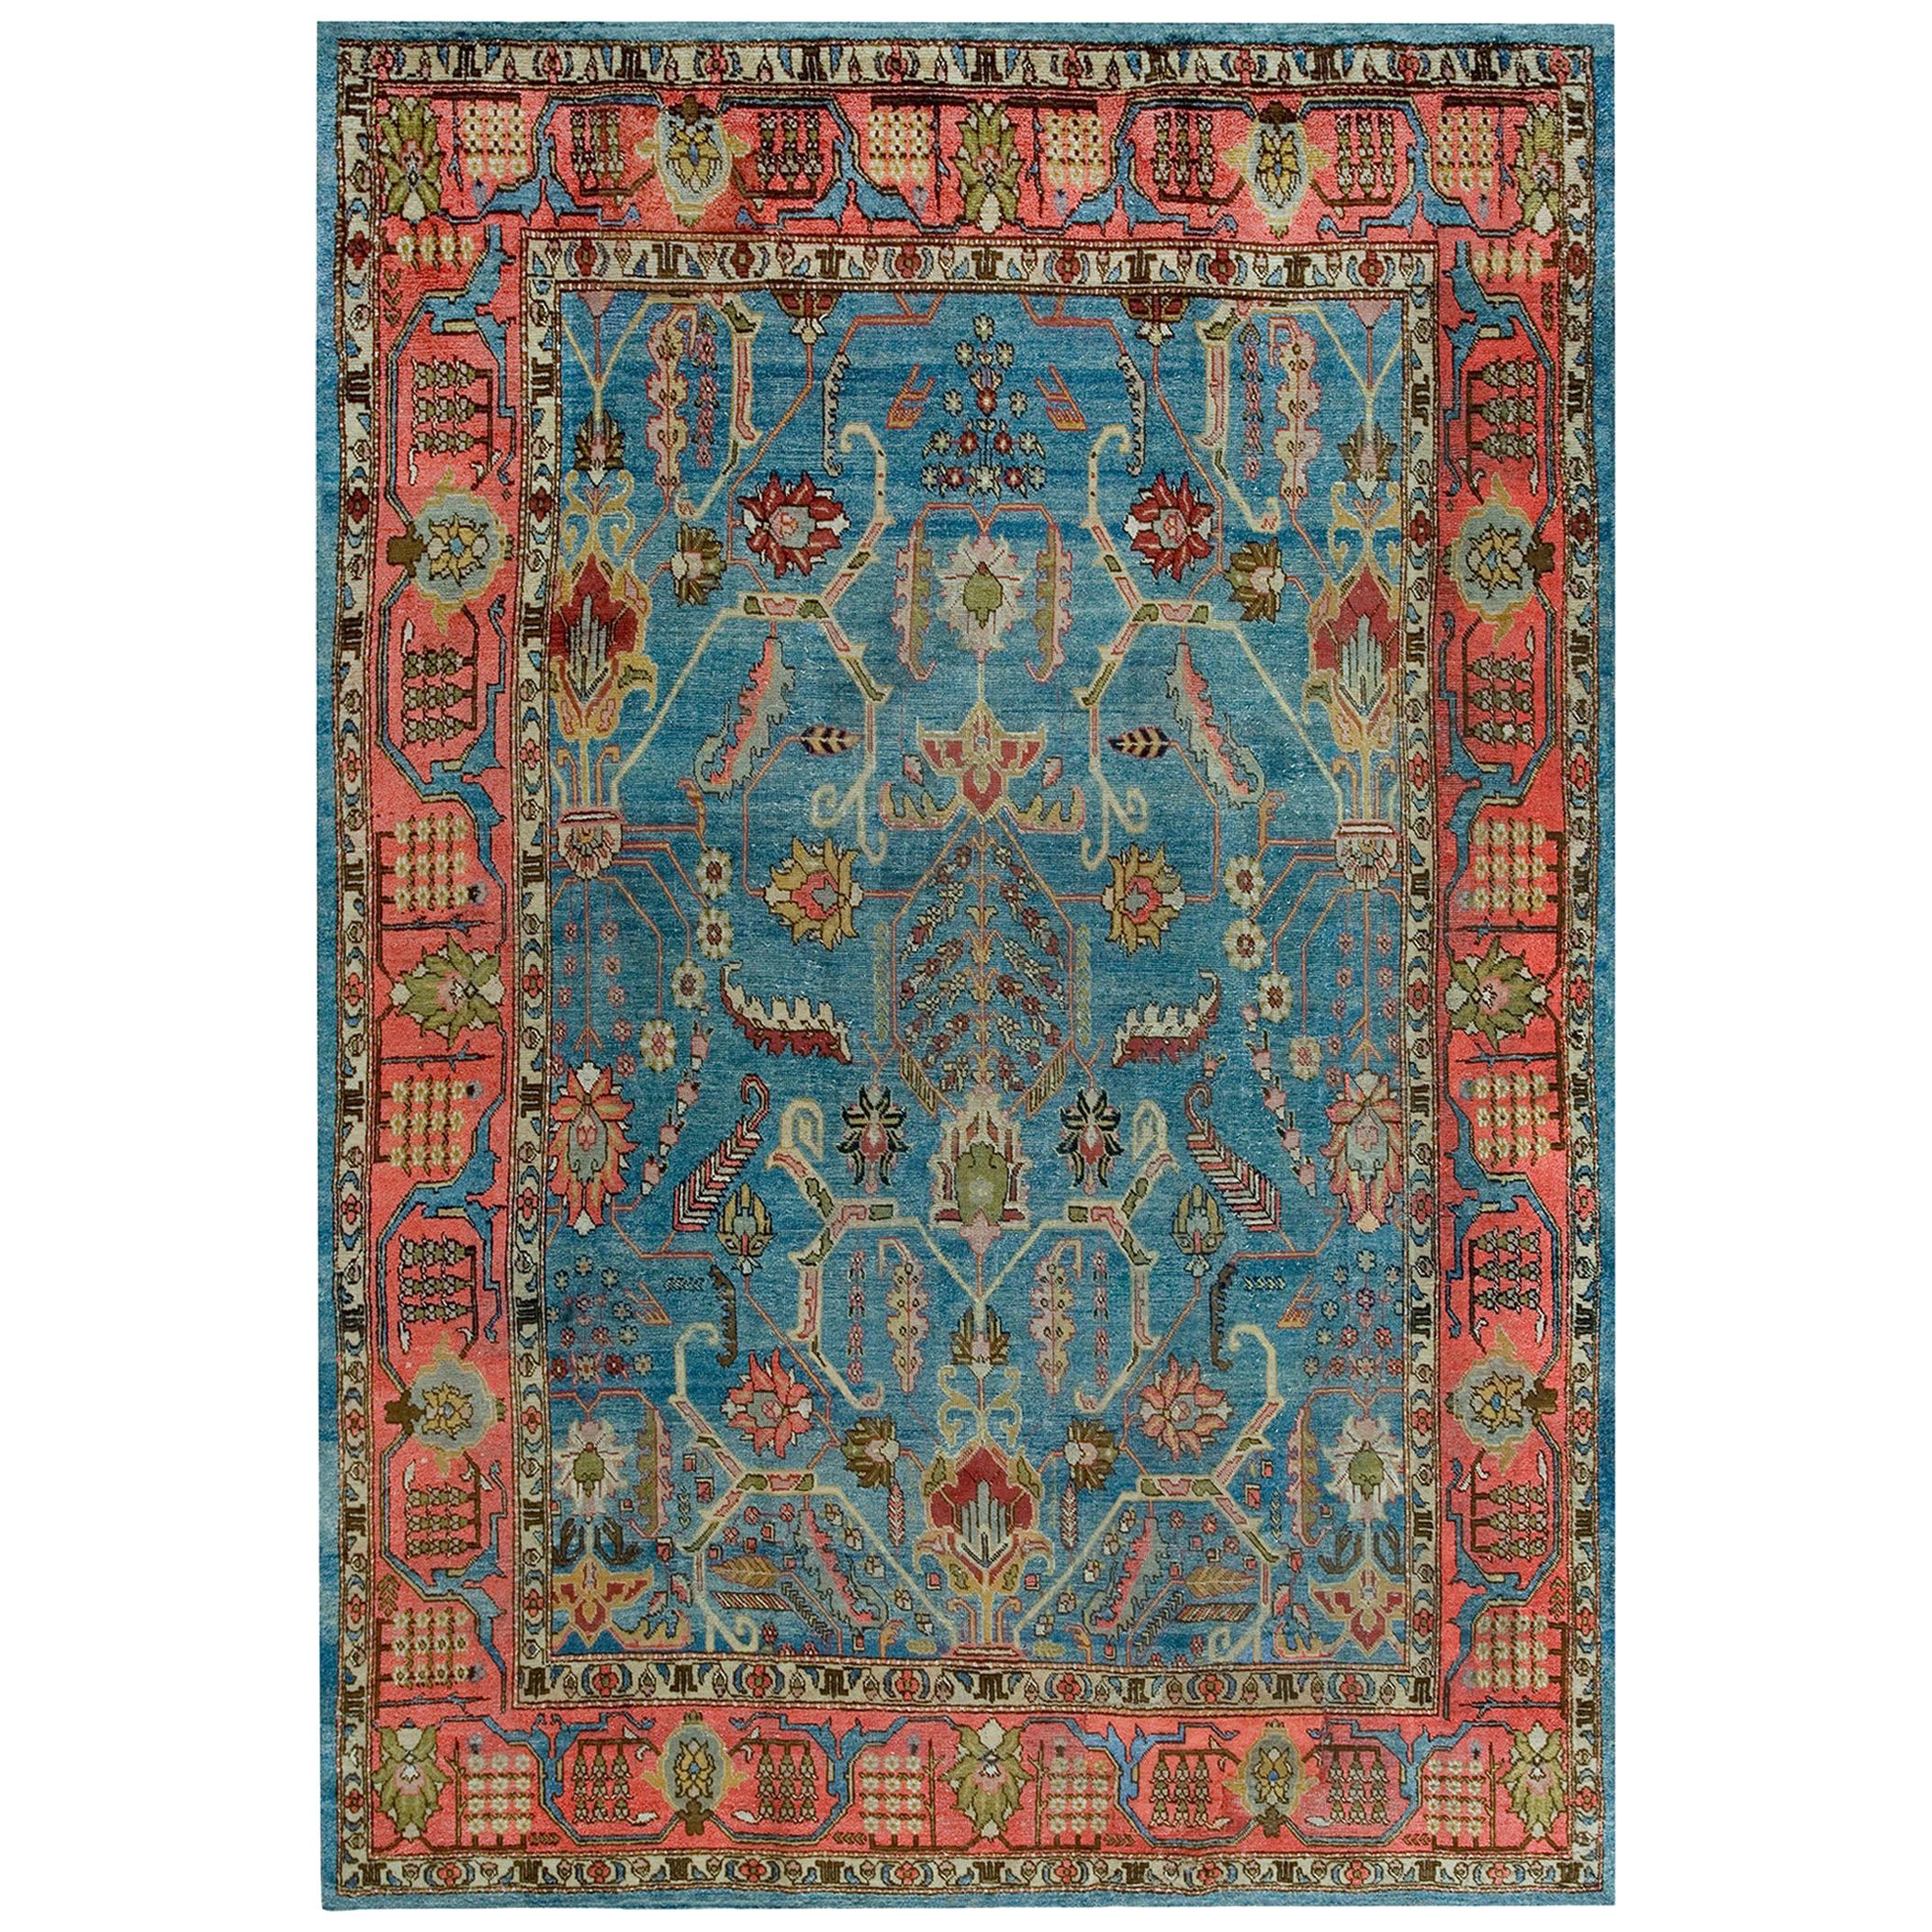 19th Century Central Asian Silk Khotan "Kashgar" Carpet ( 9' x 13' - 275 x 396 ) For Sale